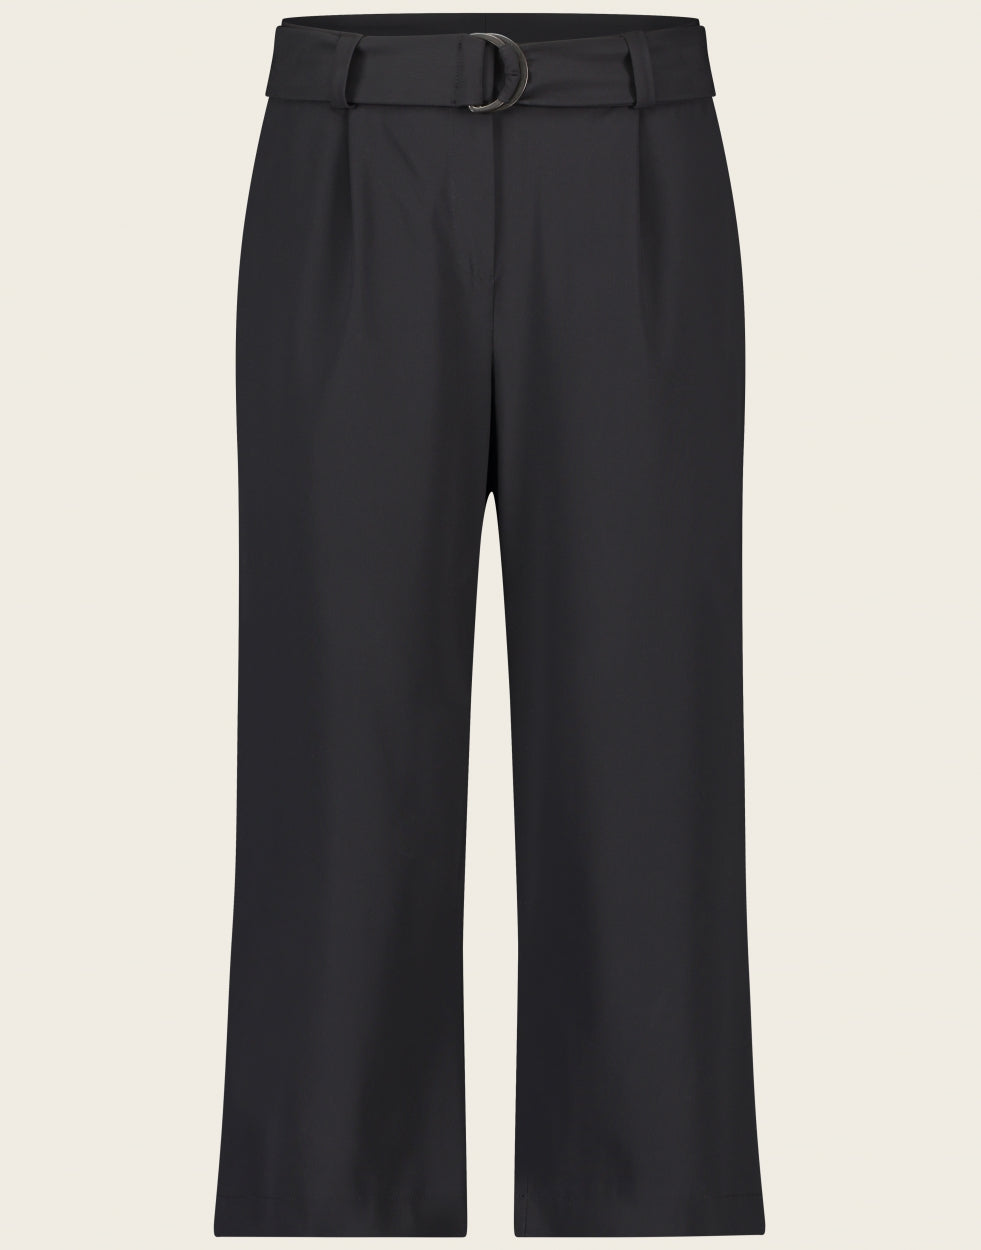 Pants Erin Technical Jersey | Black